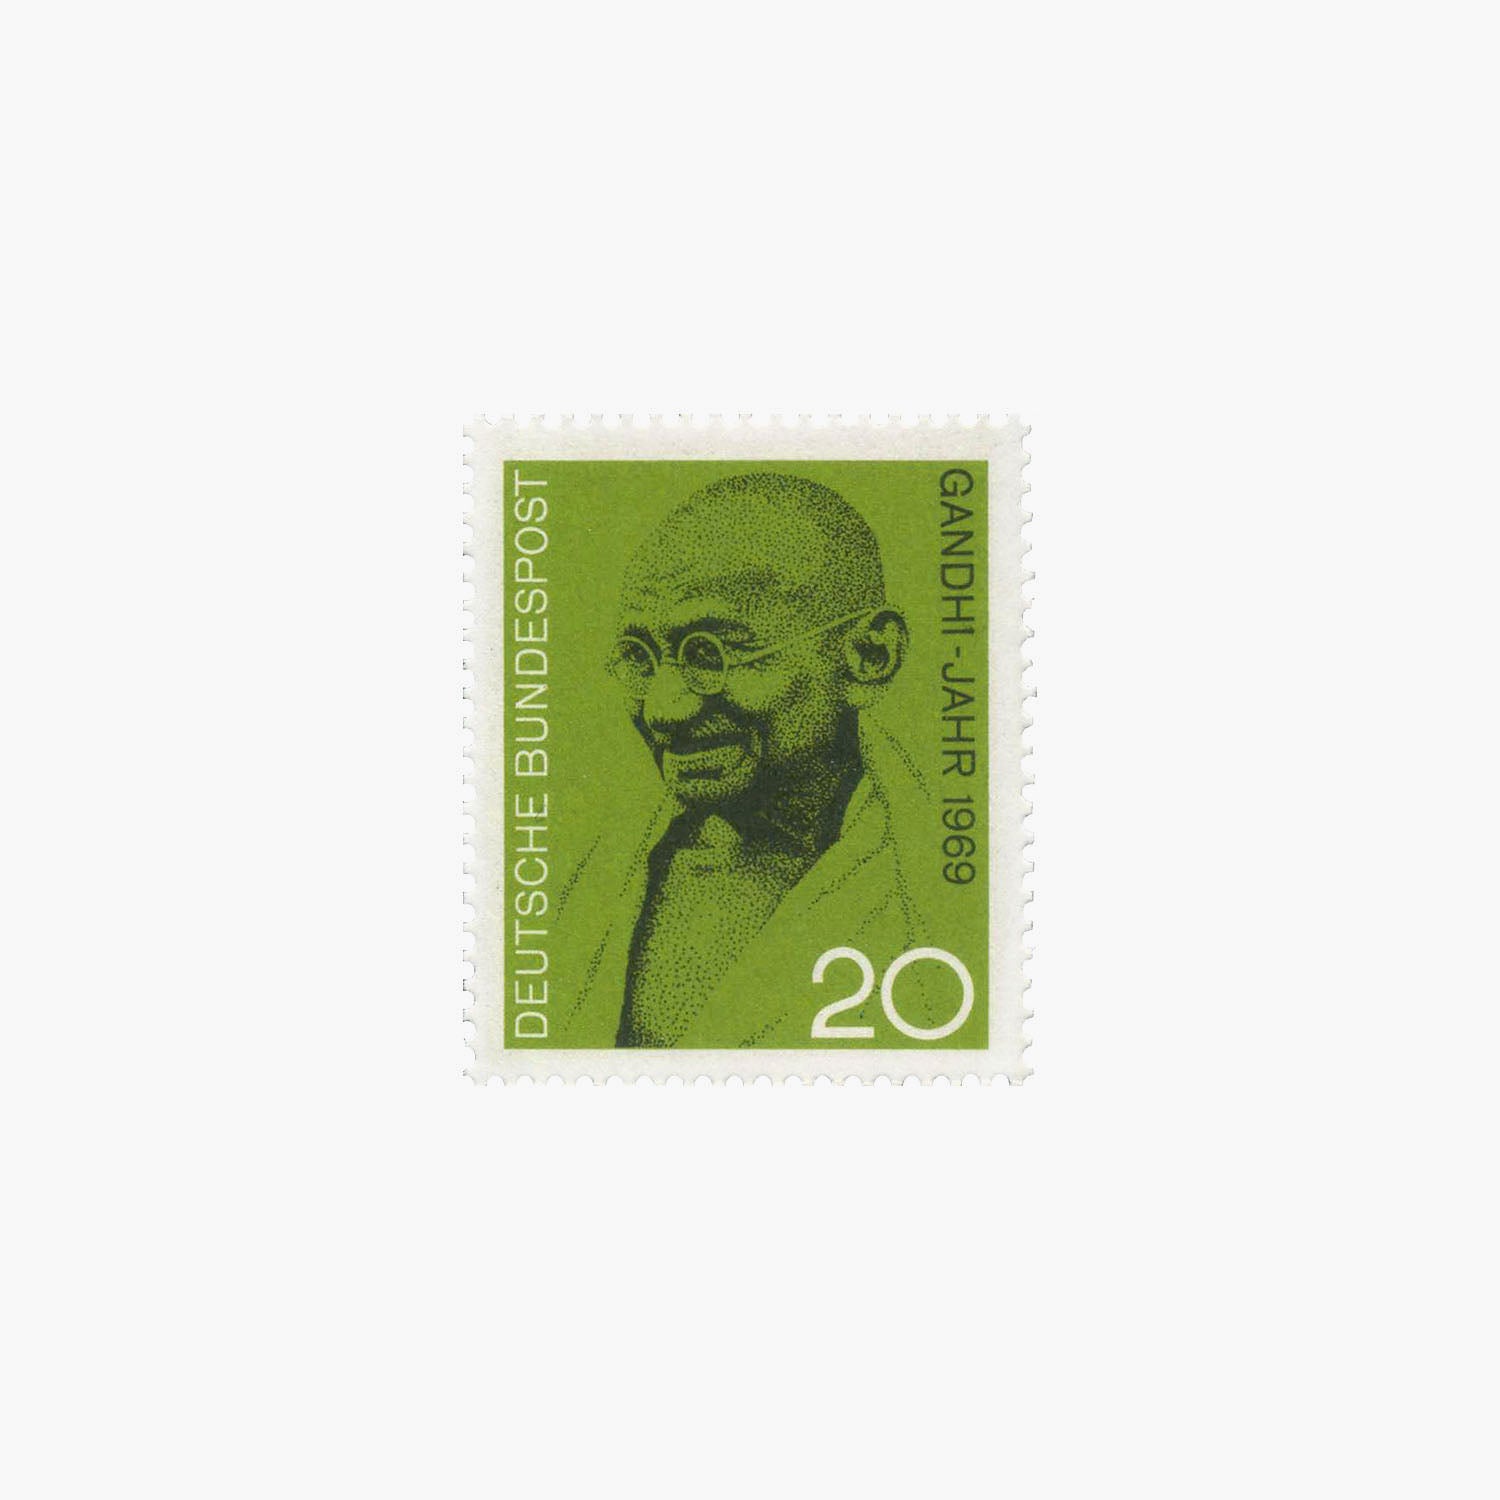 Mahatma Gandhi coin, banknote and stamp set